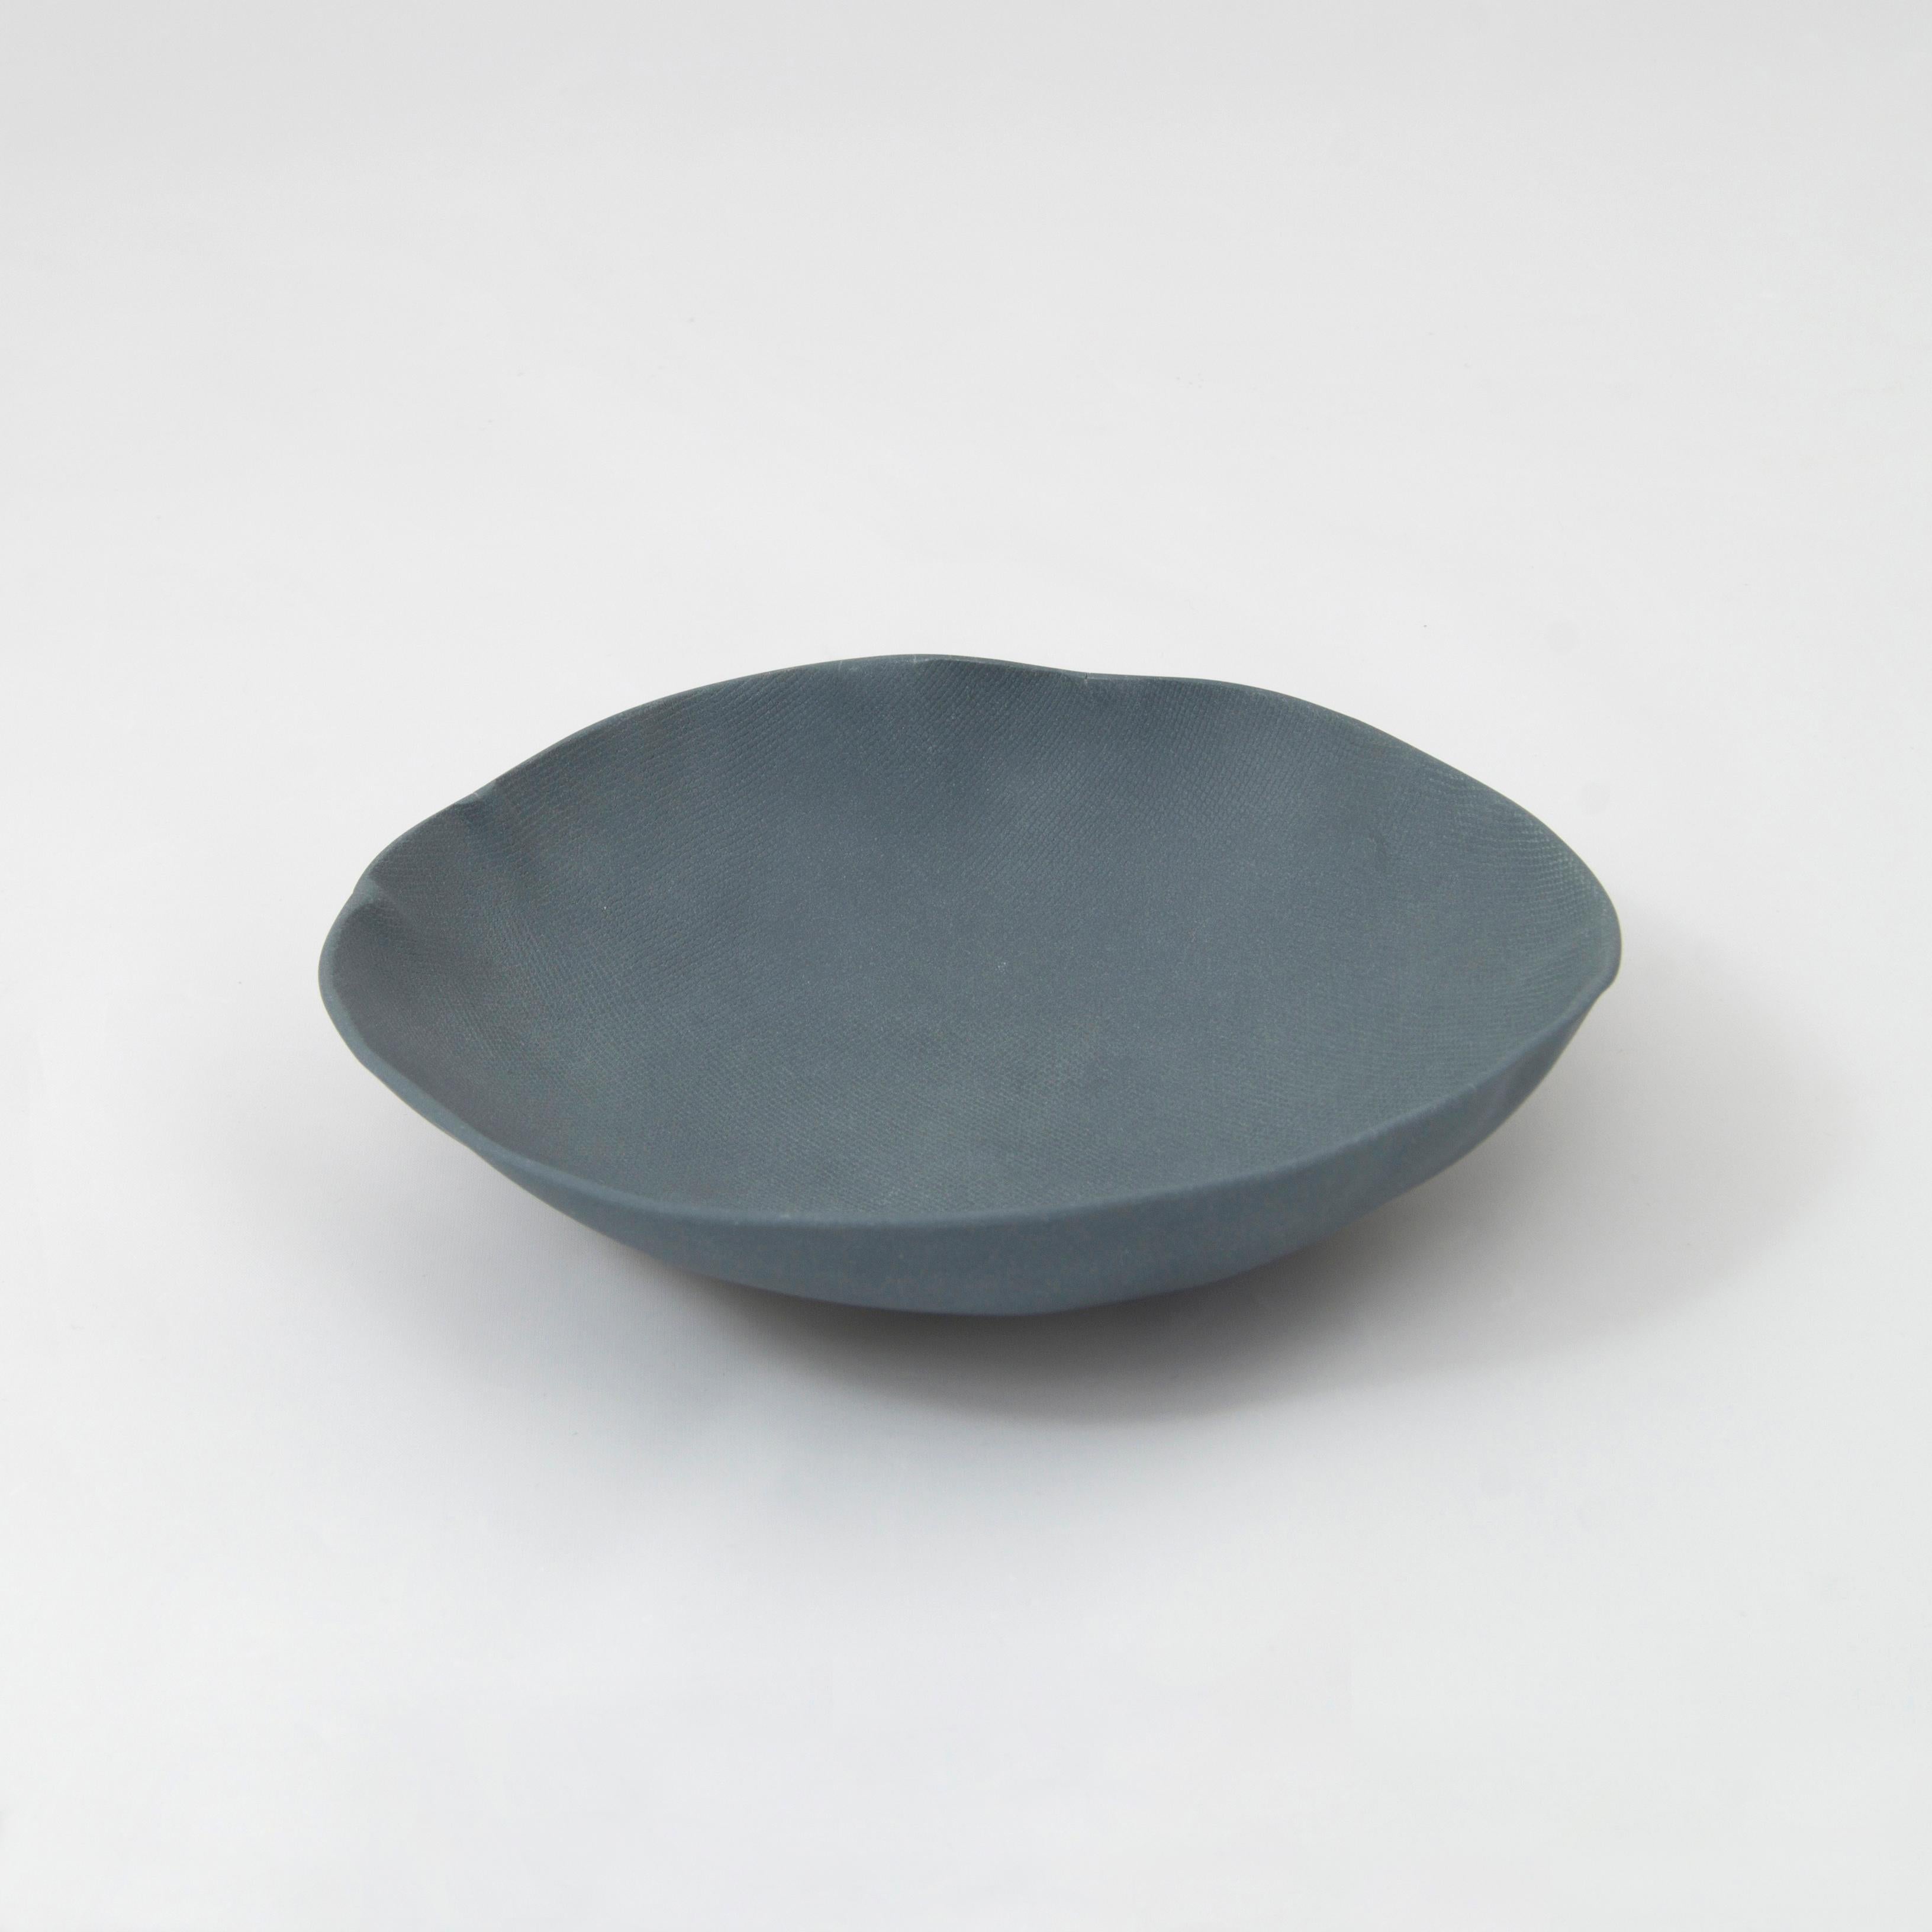 Minimalist Handmade Serving Plate Black Porcelain Small Jicara For Sale